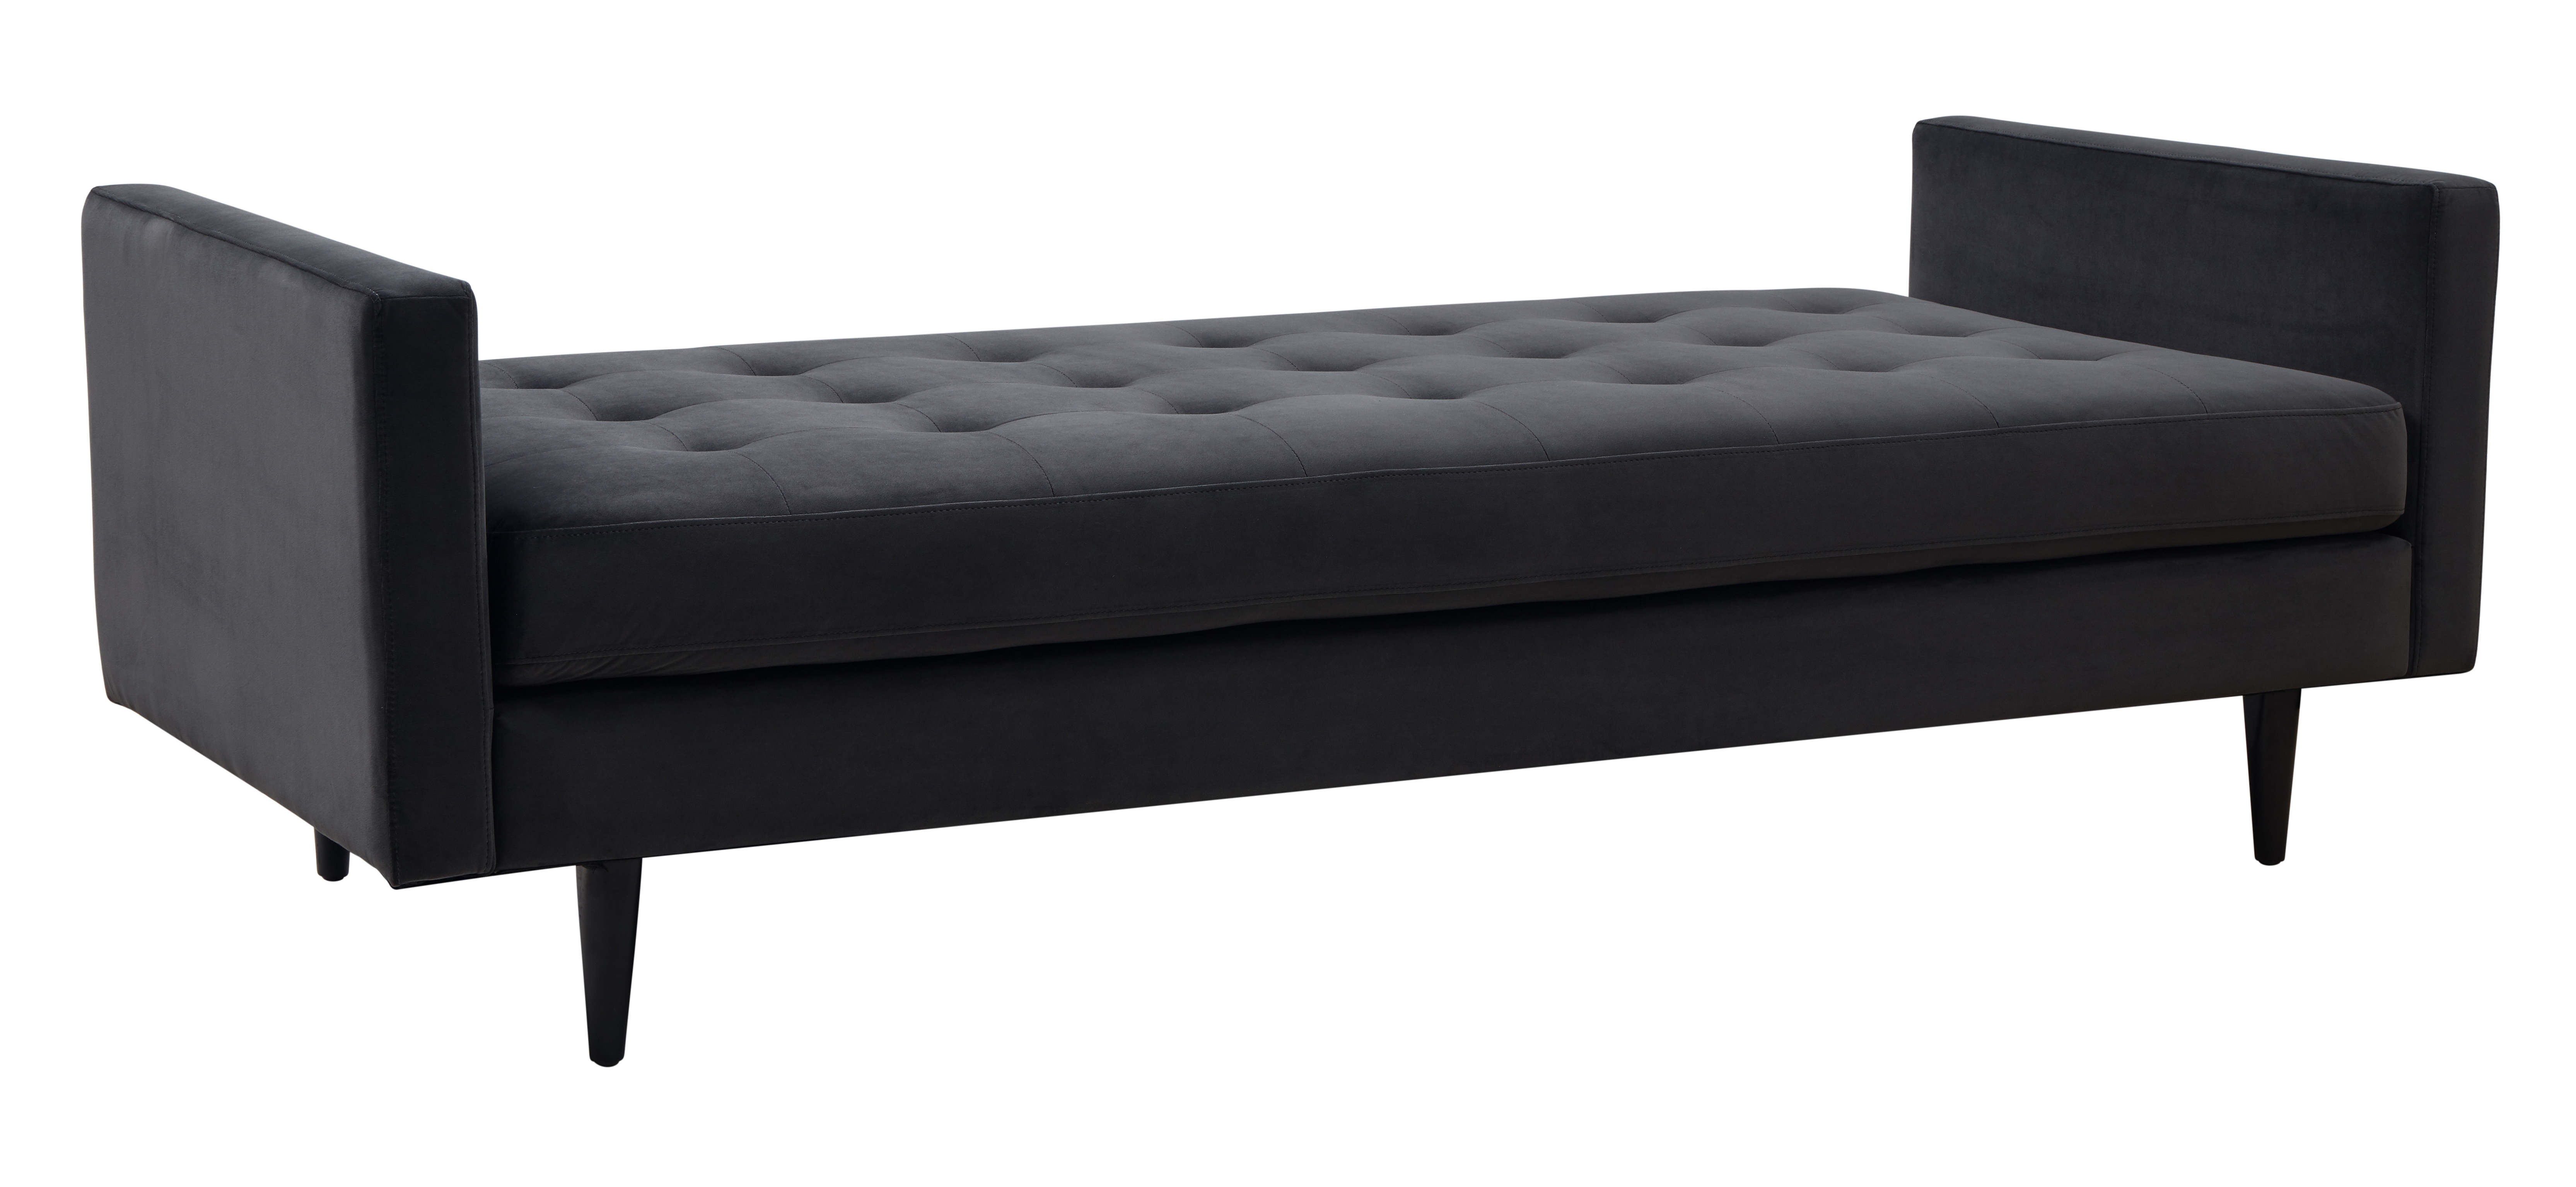 Francine Upholstered Bench - Dark Grey - Arlo Home - Image 2